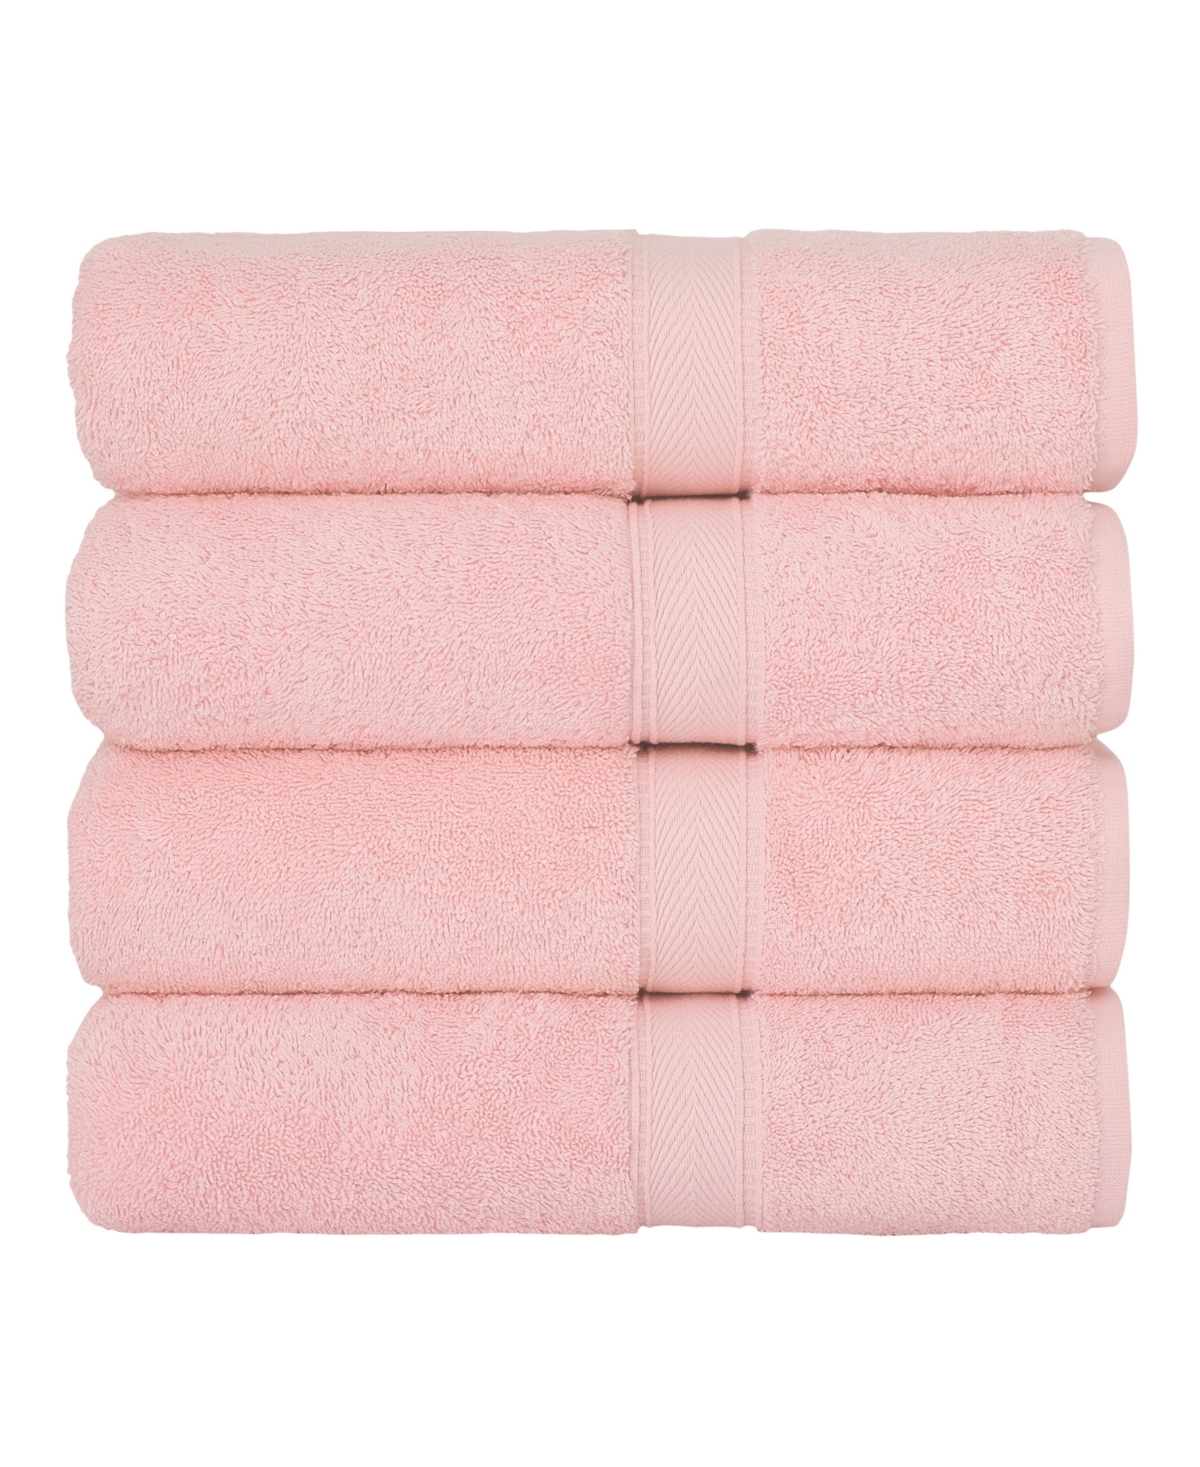 Linum Home Sinemis 4-pc. Bath Towel Set In Pink